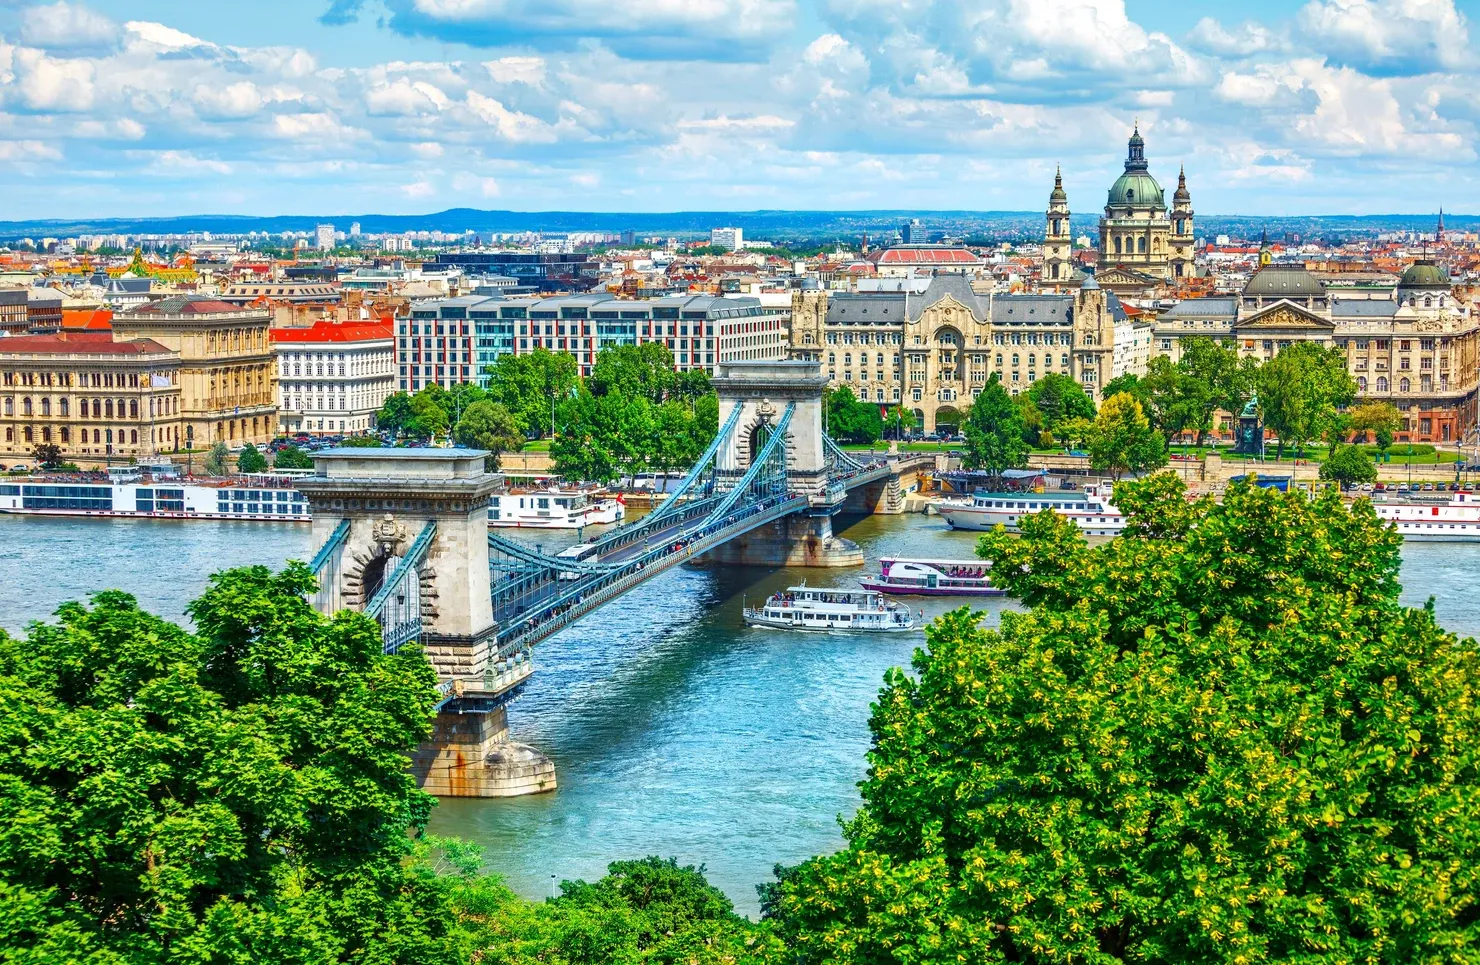 Chain bridge on Danube river in Budapest city, Hungary